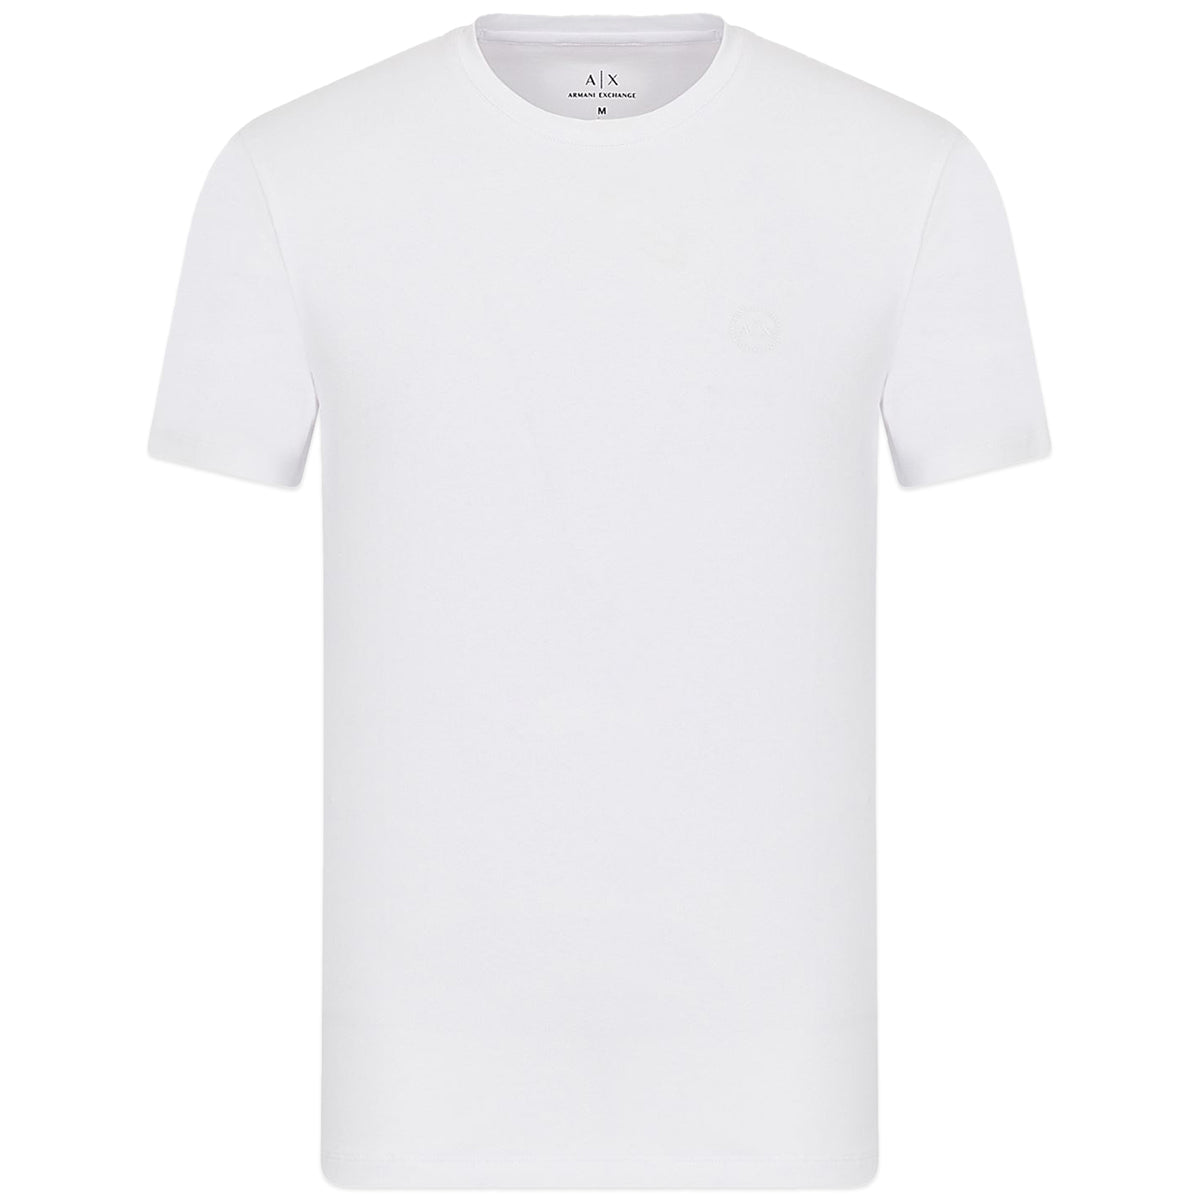 Introducir 105+ imagen armani exchange plain white t shirt